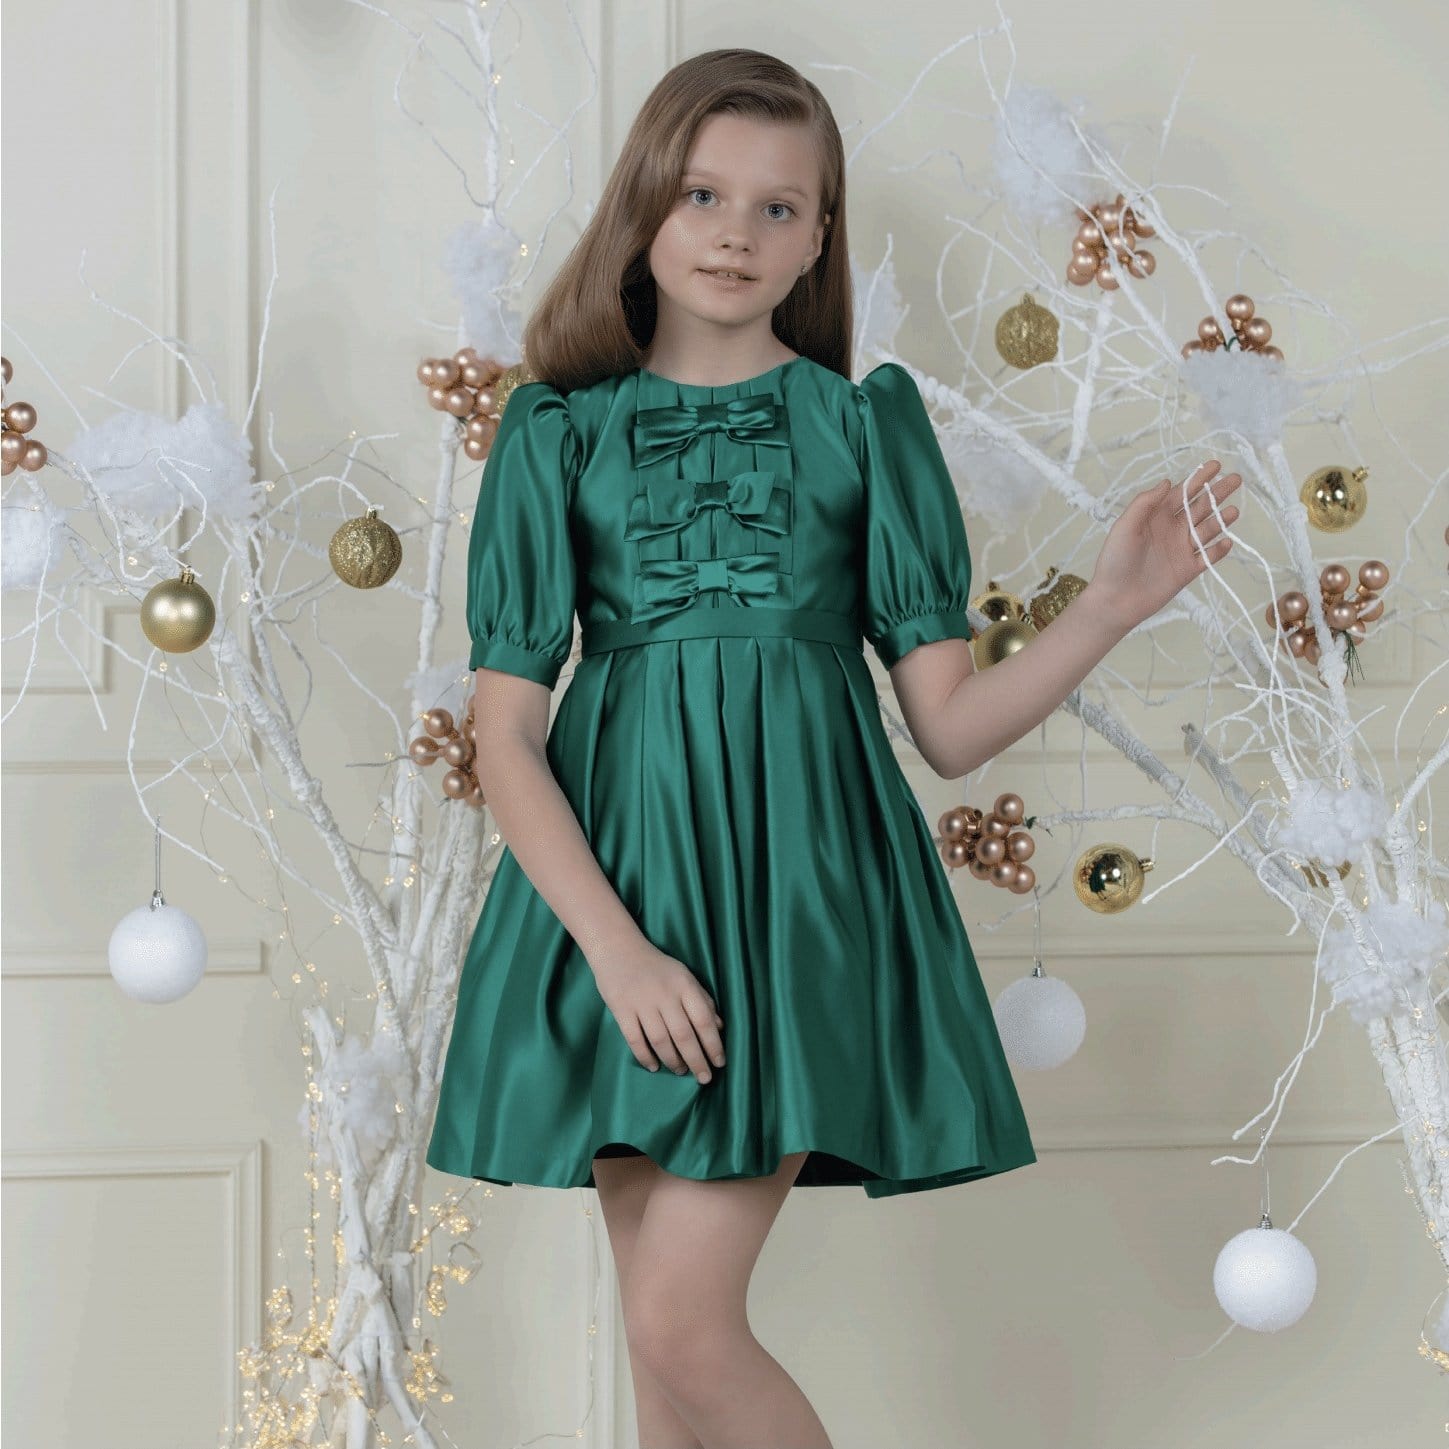 PATACHOU - Satin Party Dress - Green